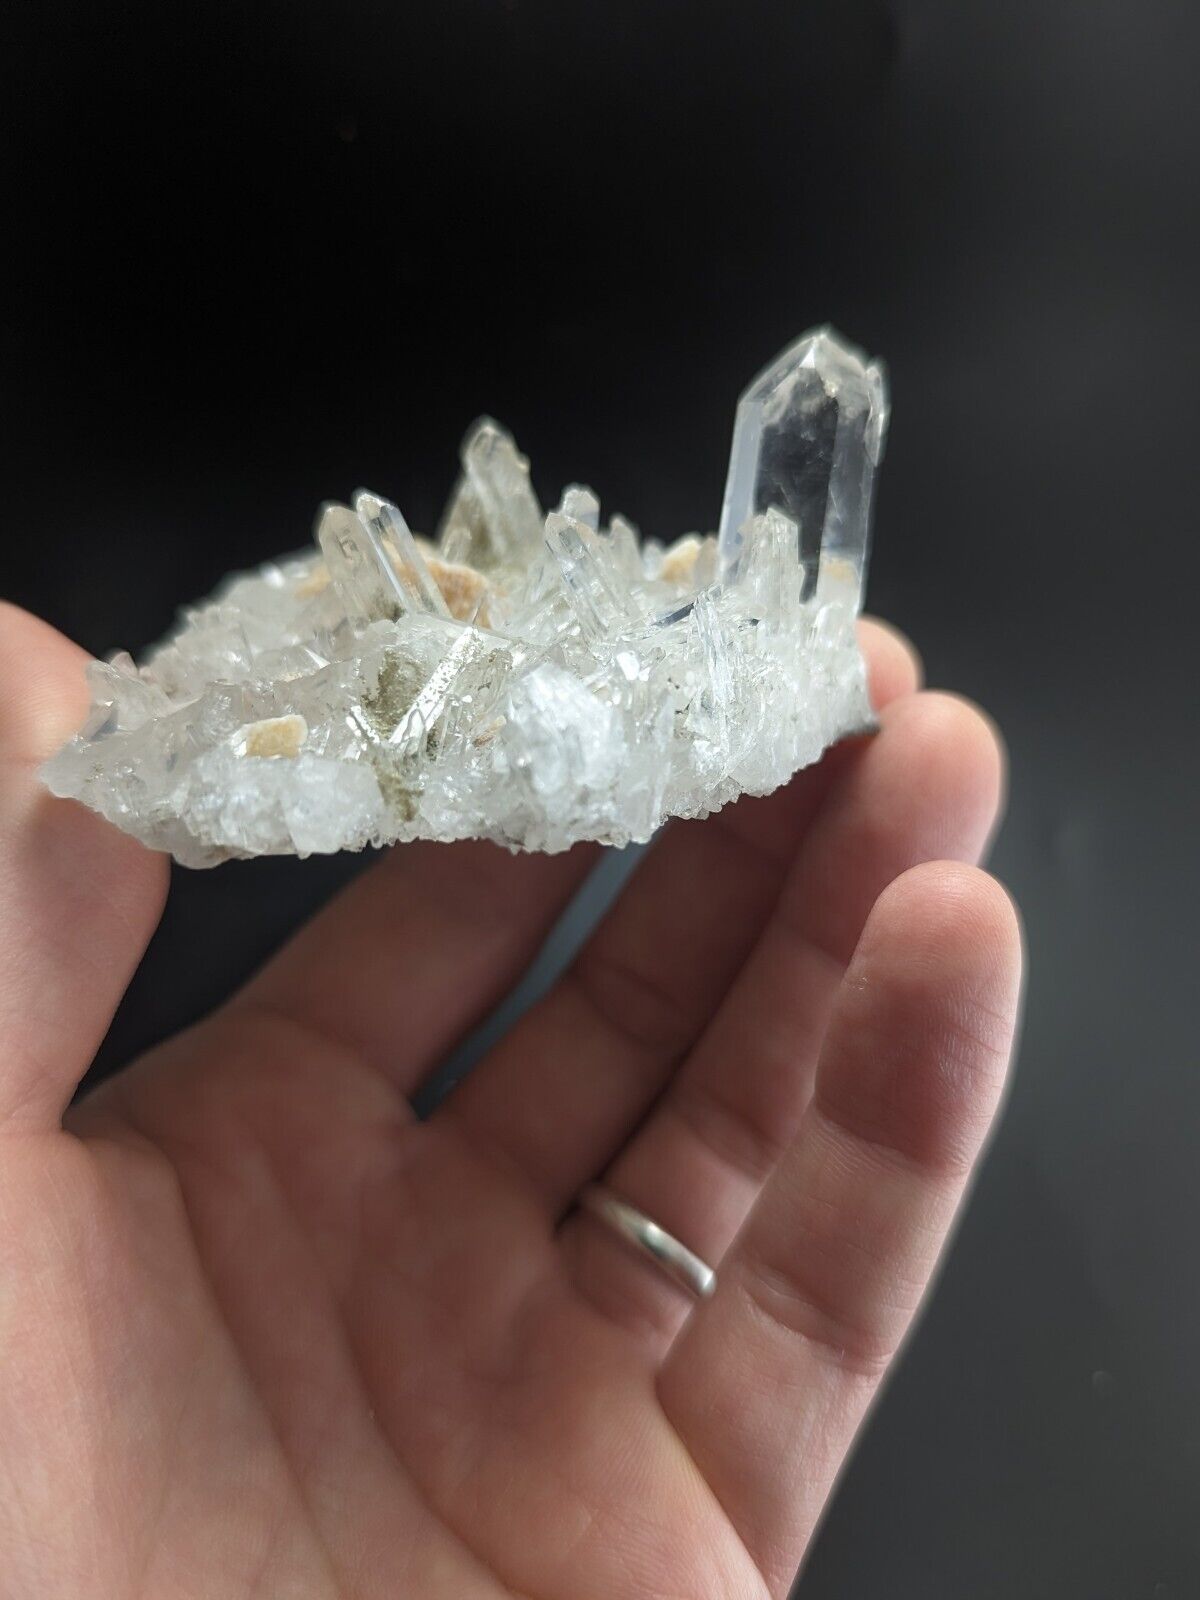 Jeffrey Quarry Quartz Crystal w/ Cookeite and Ankerite,  Ultra Rare, Arkansas